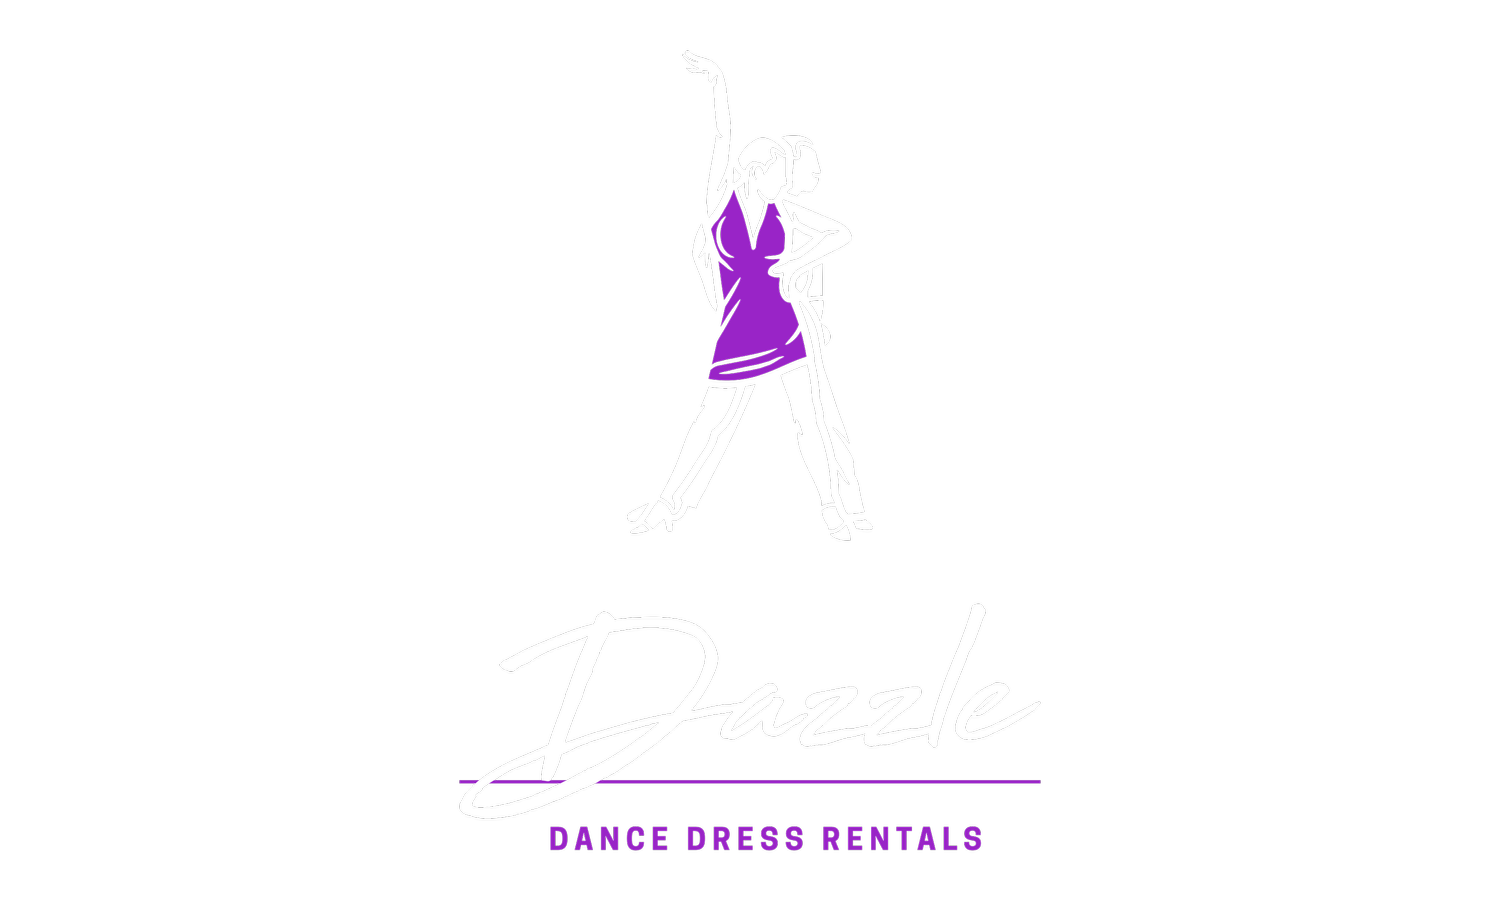 Dazzle Dance Dress Rentals - Ballroom Dance Dress Rentals - Latin, Rhythm, Smooth and Standard Ballroom Dresses